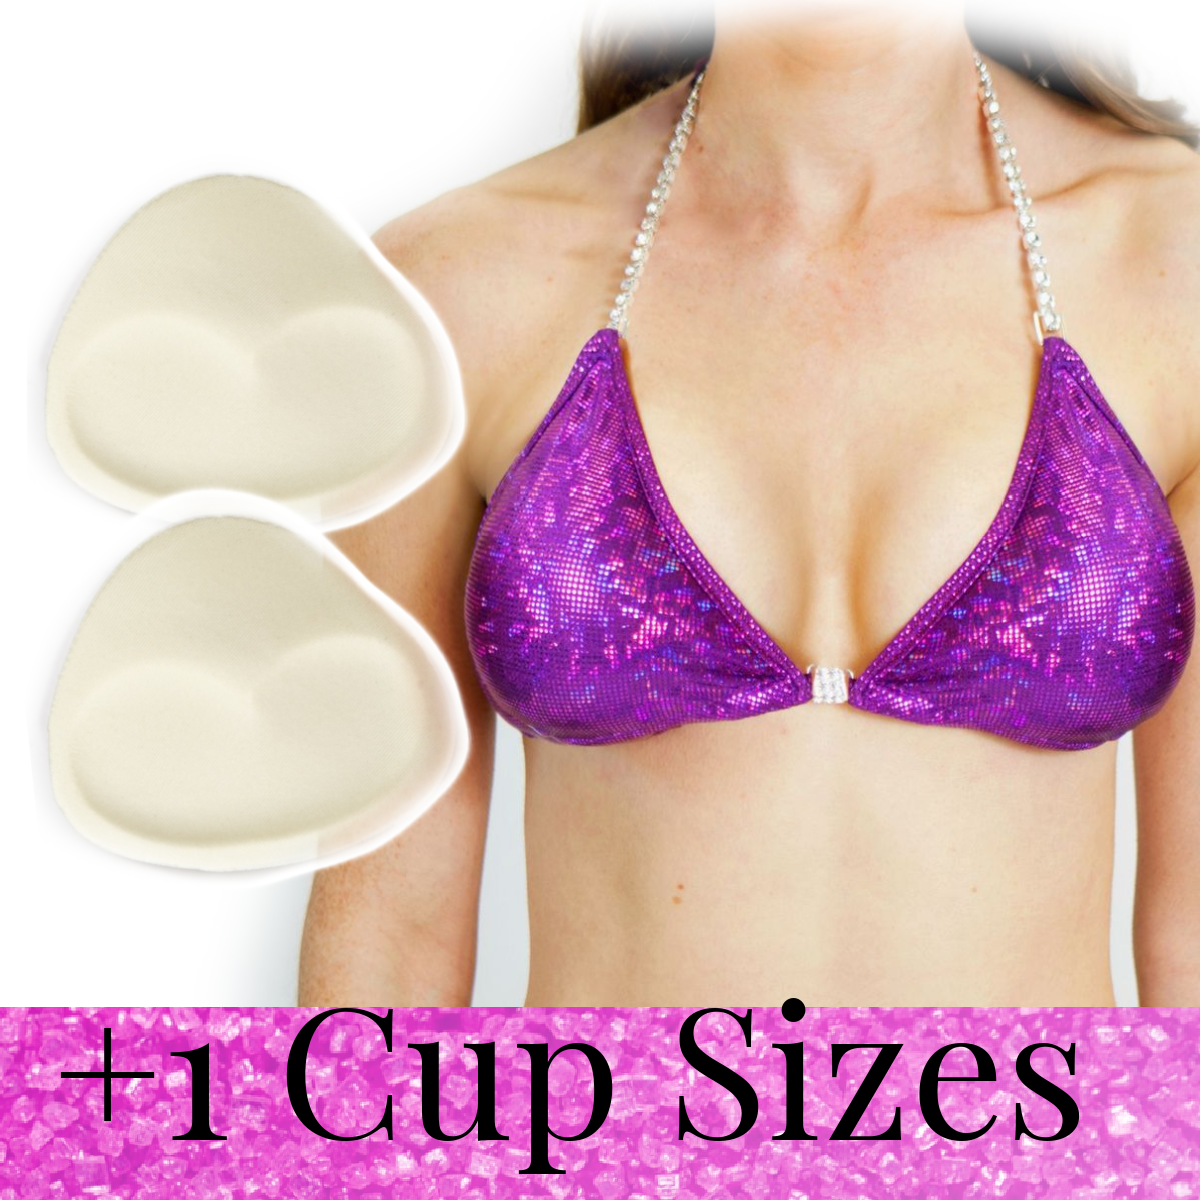 Half Breast Insert Clear Silicone Breast Inserts for Bra or Bikinis 